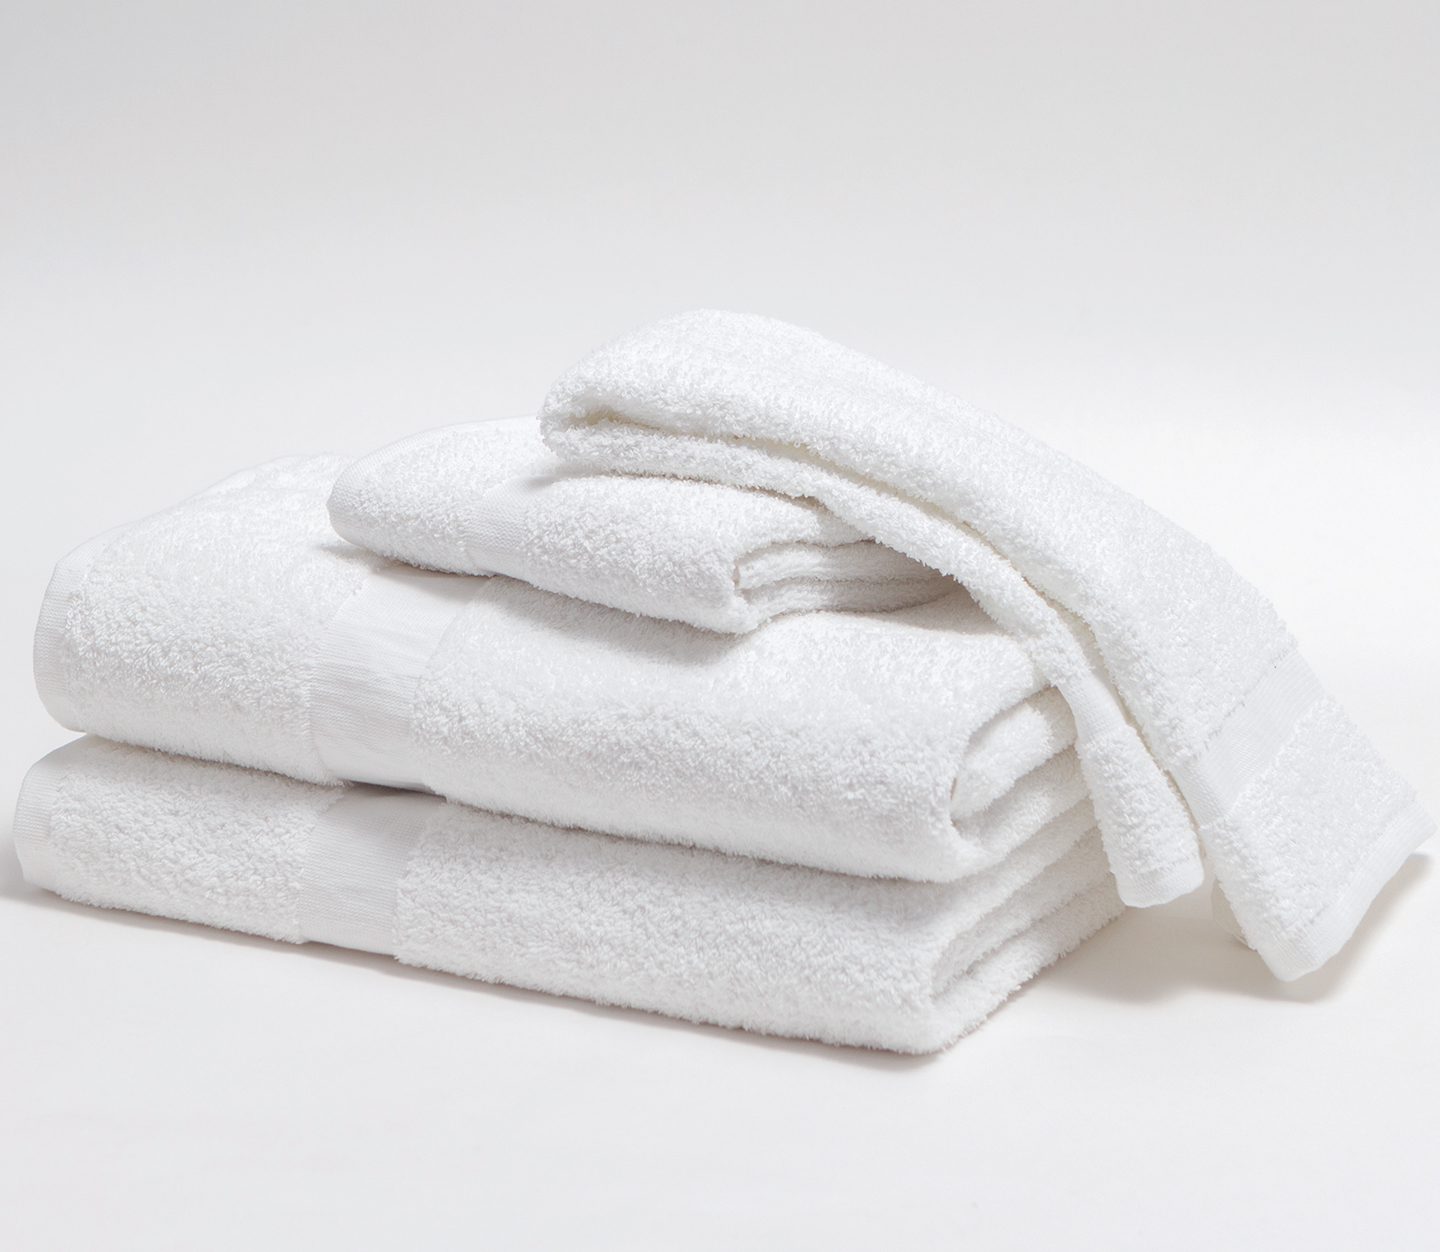 Lynova® Towels by Standard Textile